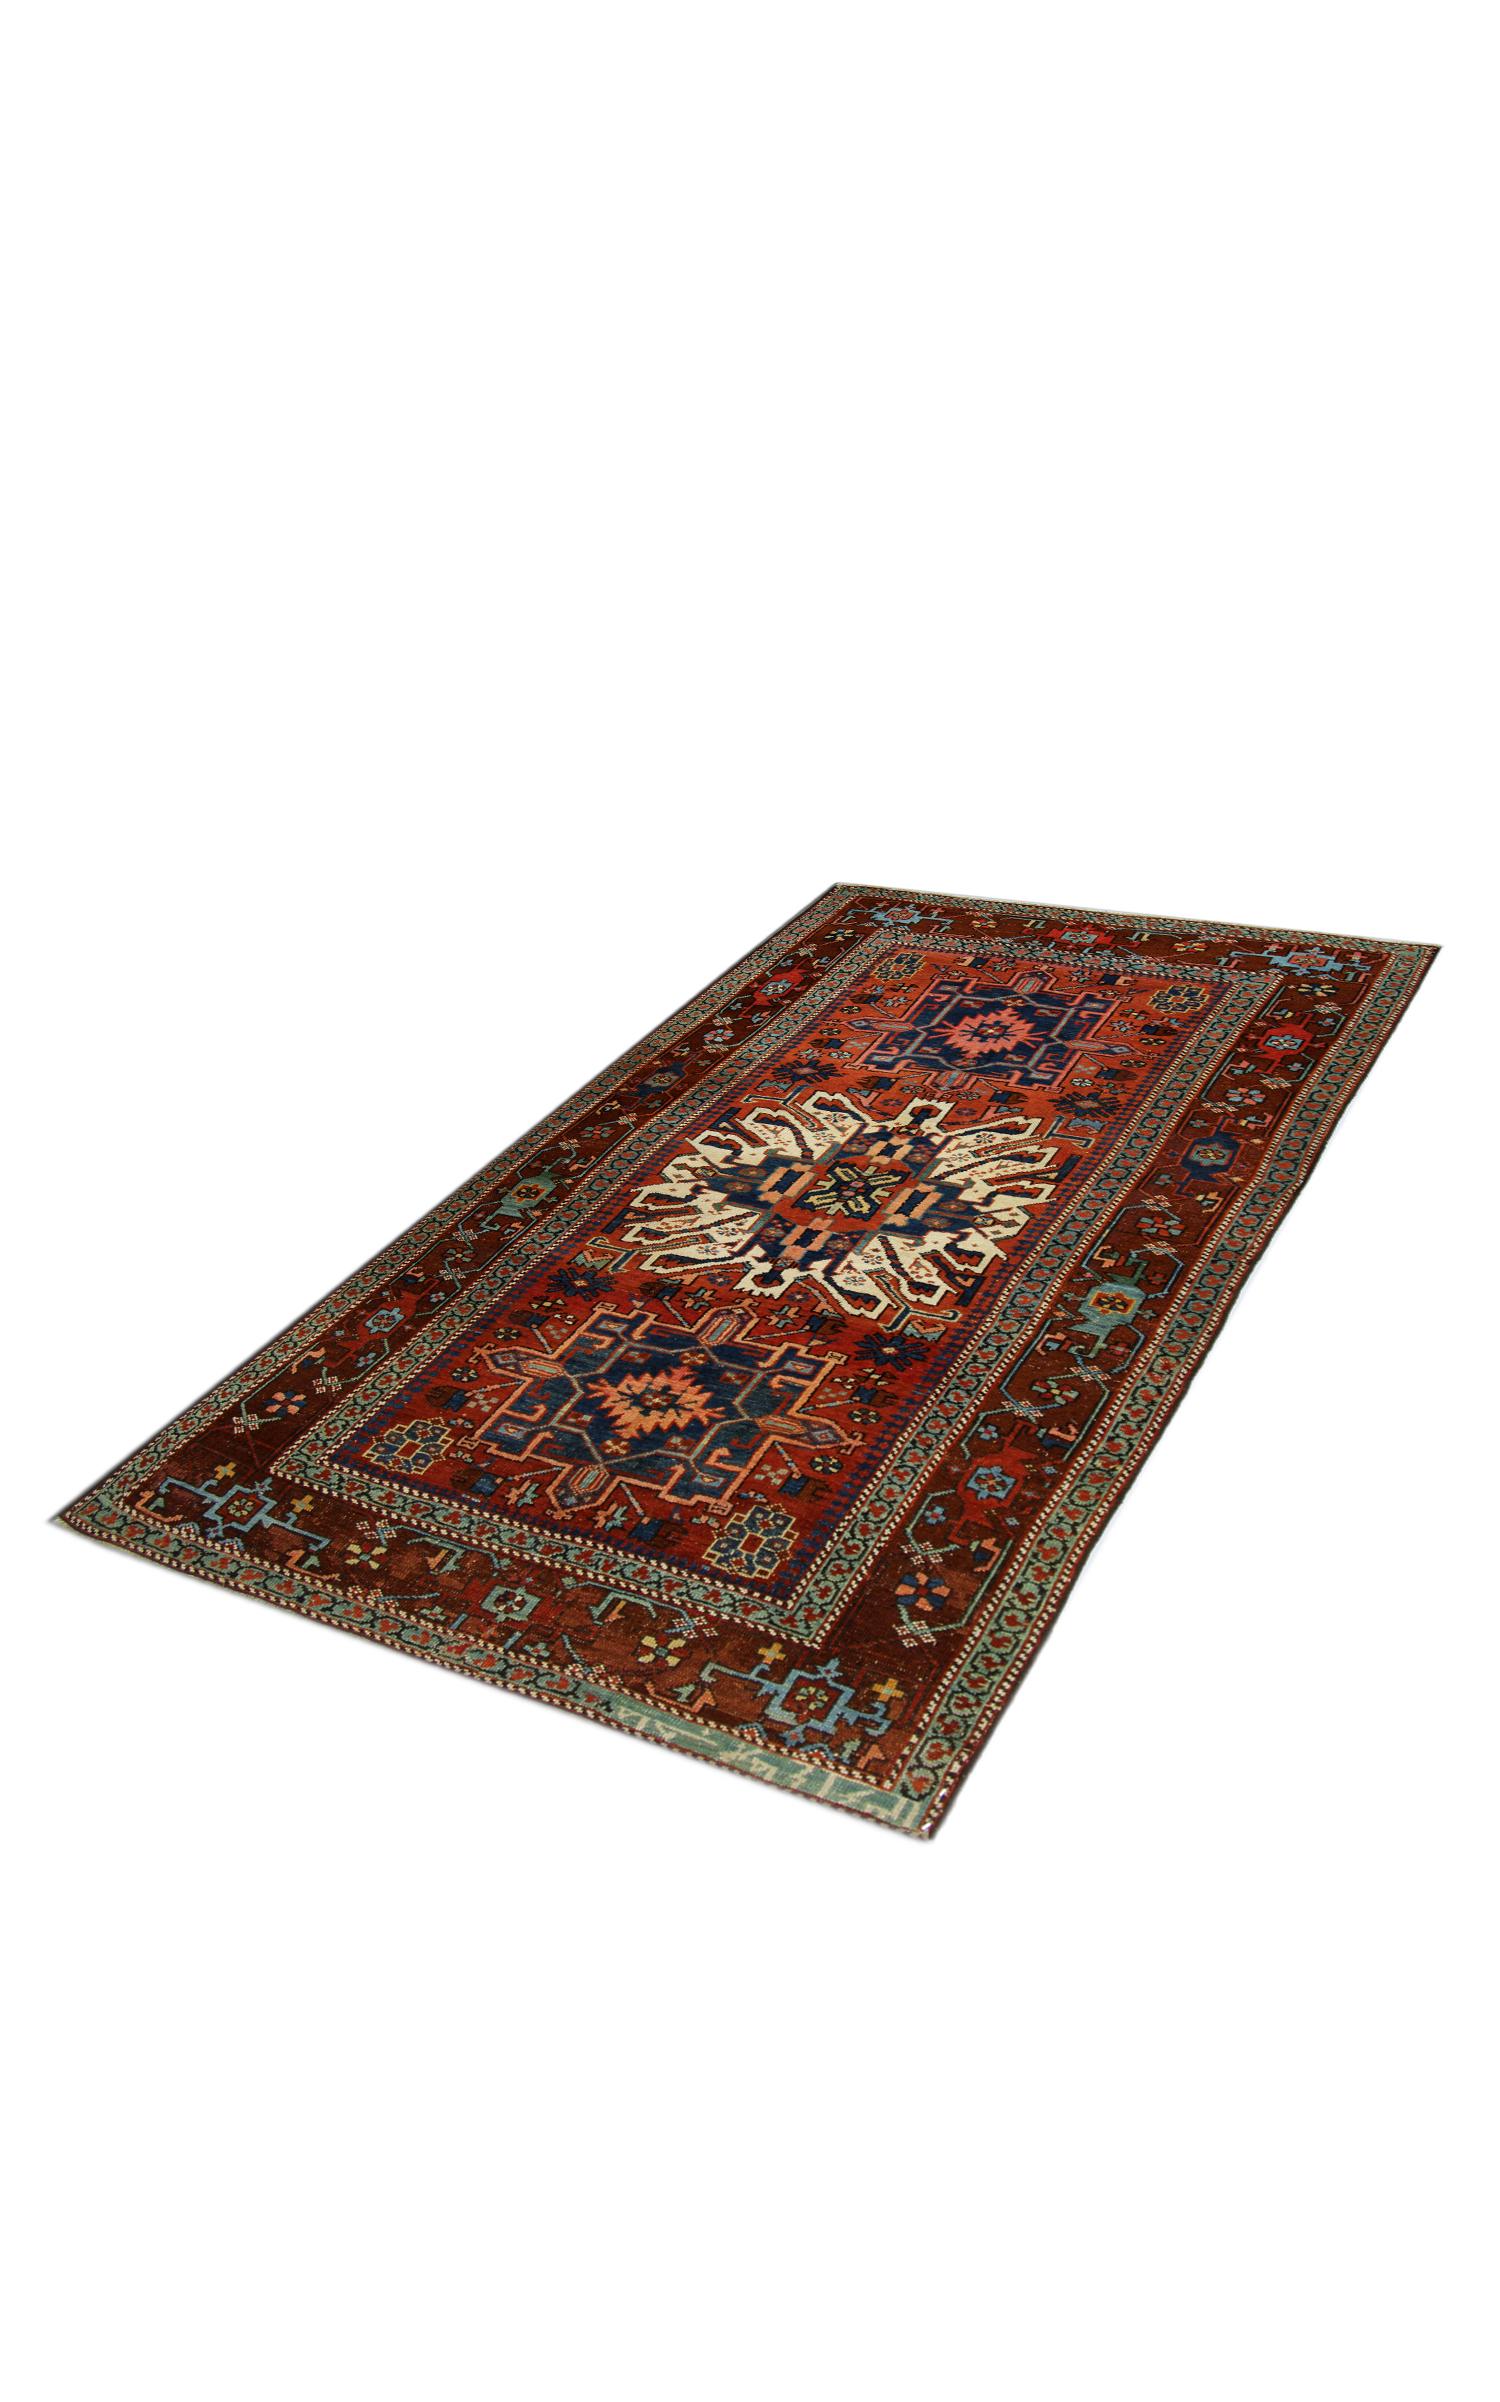 Country Antique Kazak Rug Handwoven Carpet Rust Geometric Tribal Rug For Sale